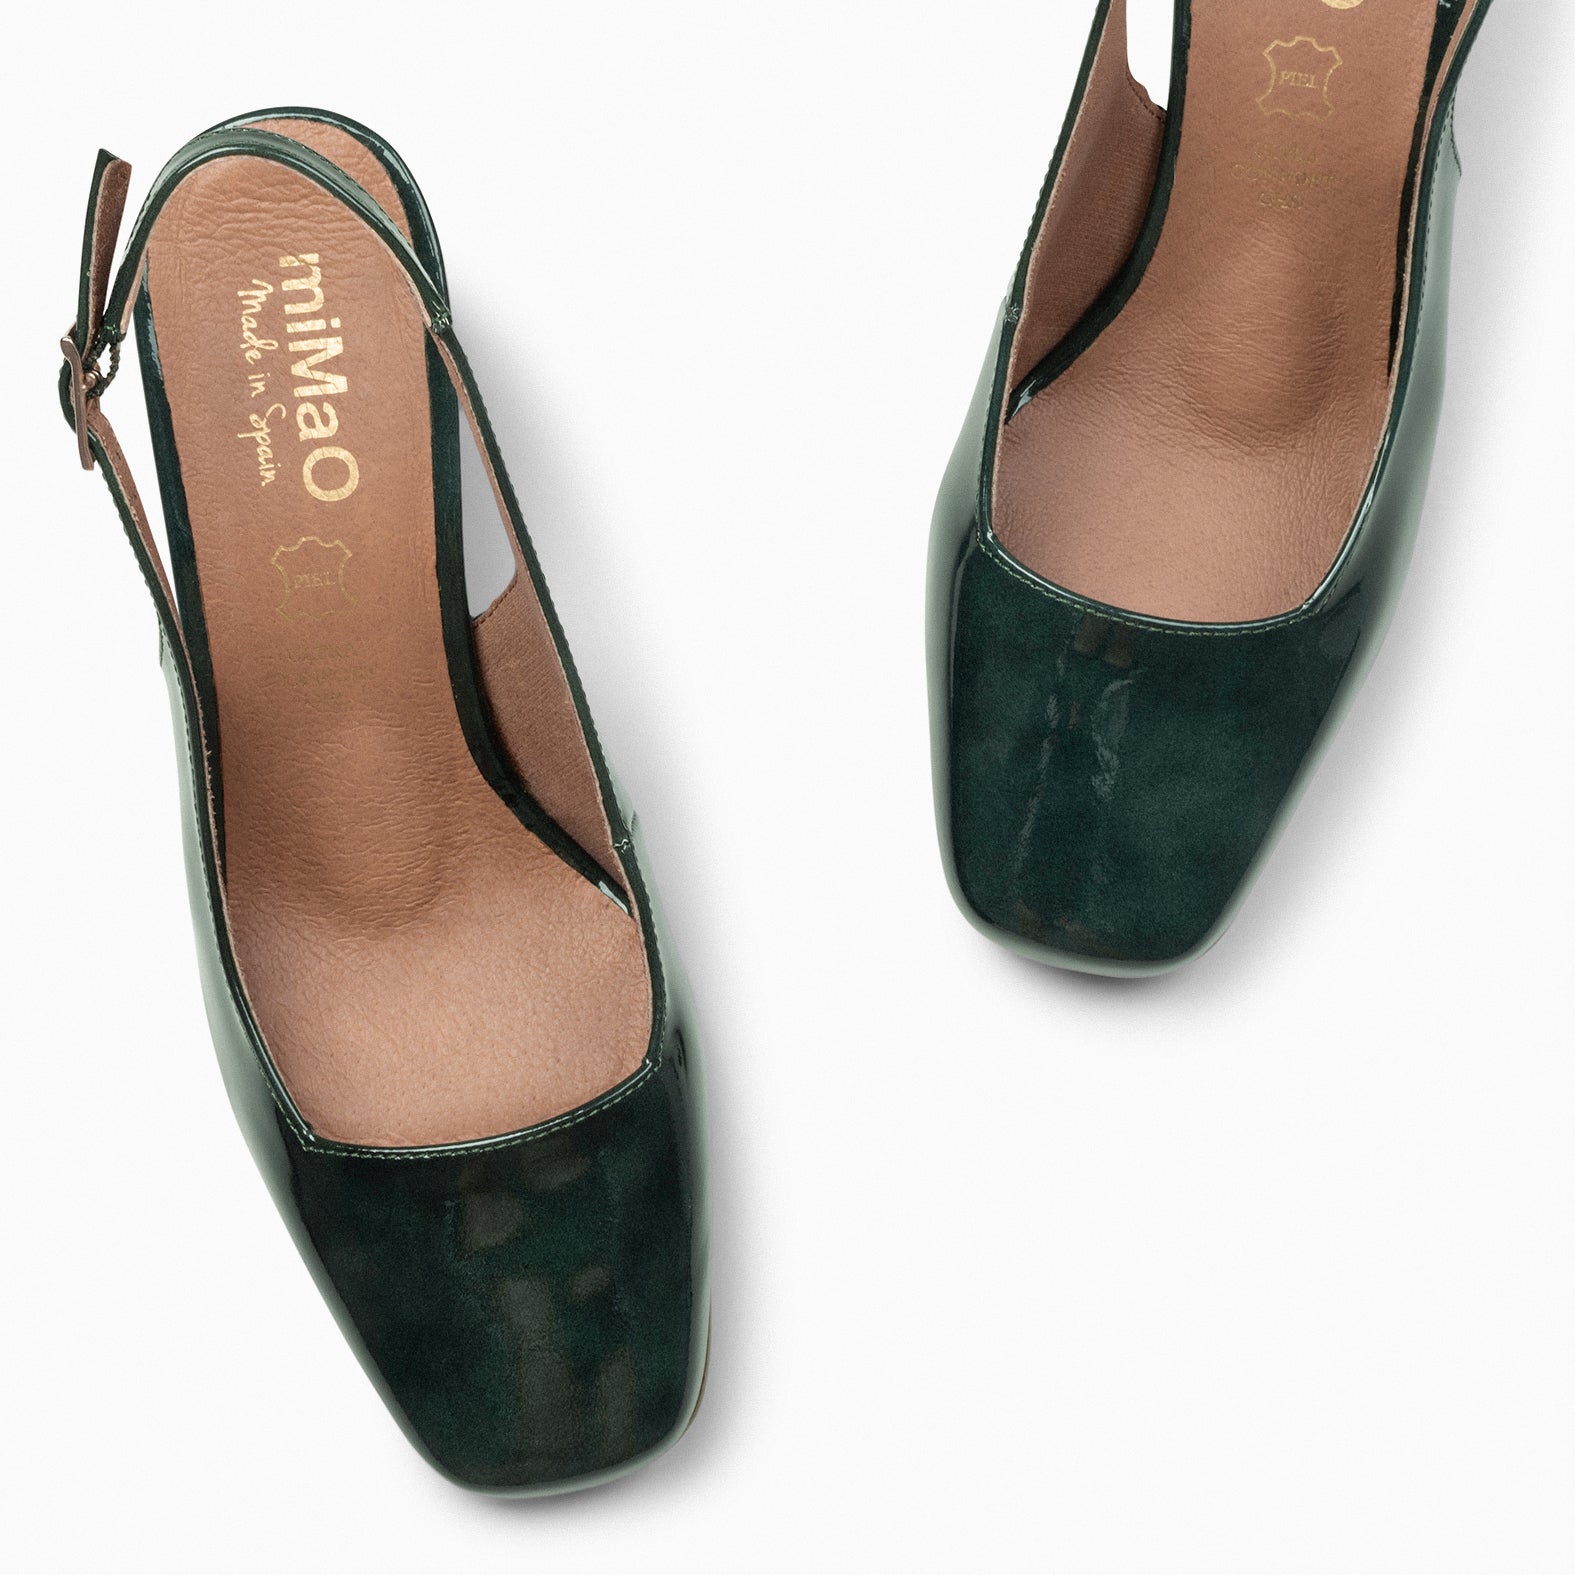 SOPHIA - GREEN sling-back heel